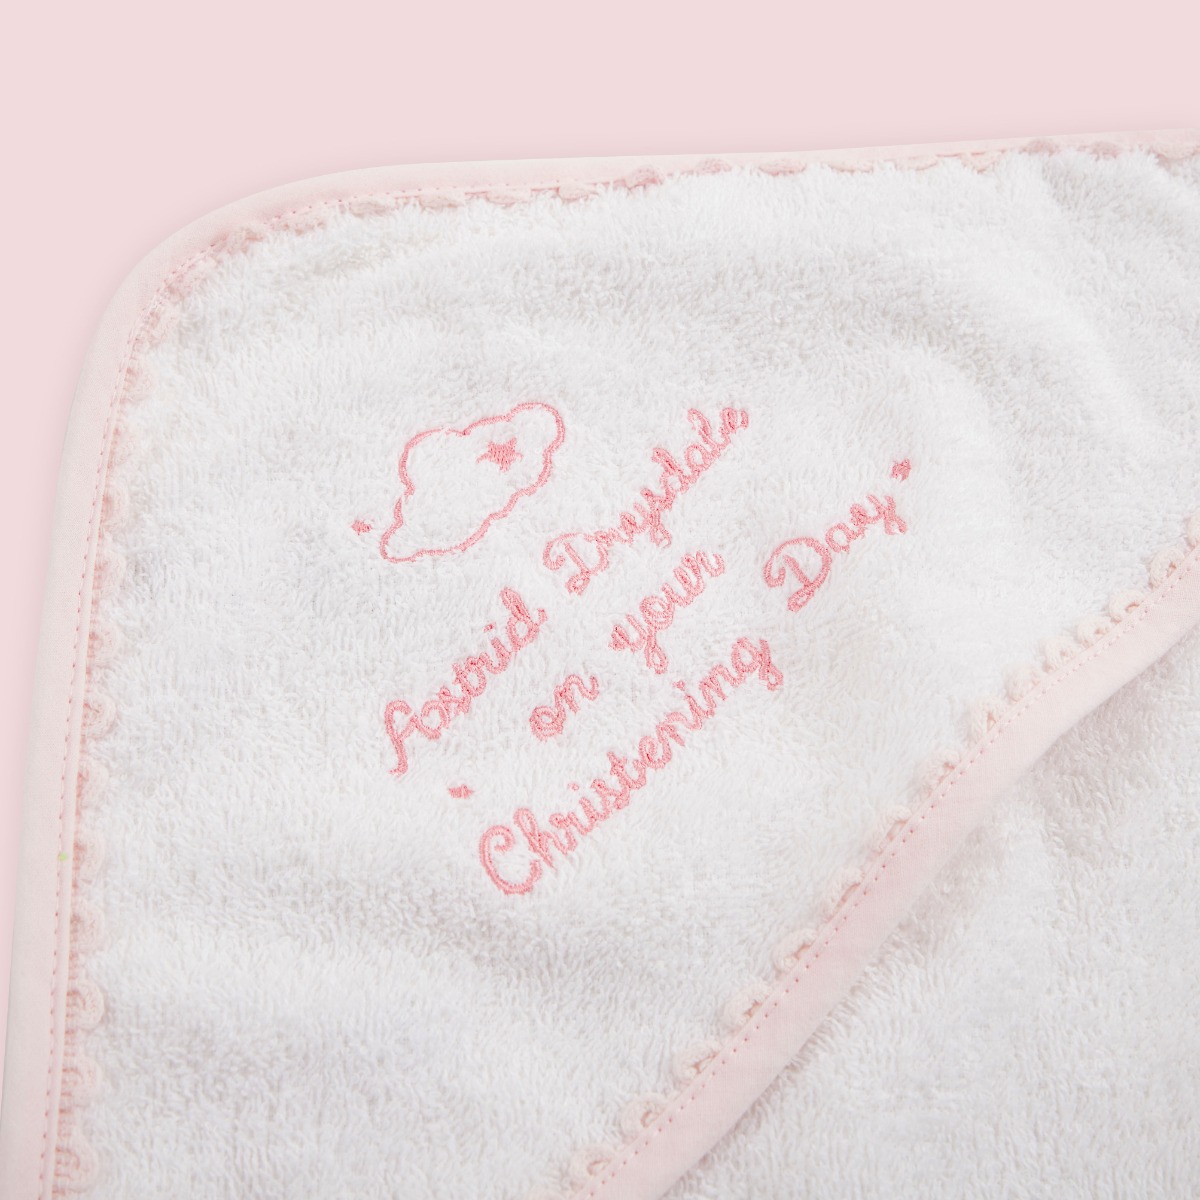 Personalised Pink Christening Picot Trim Hooded Towel